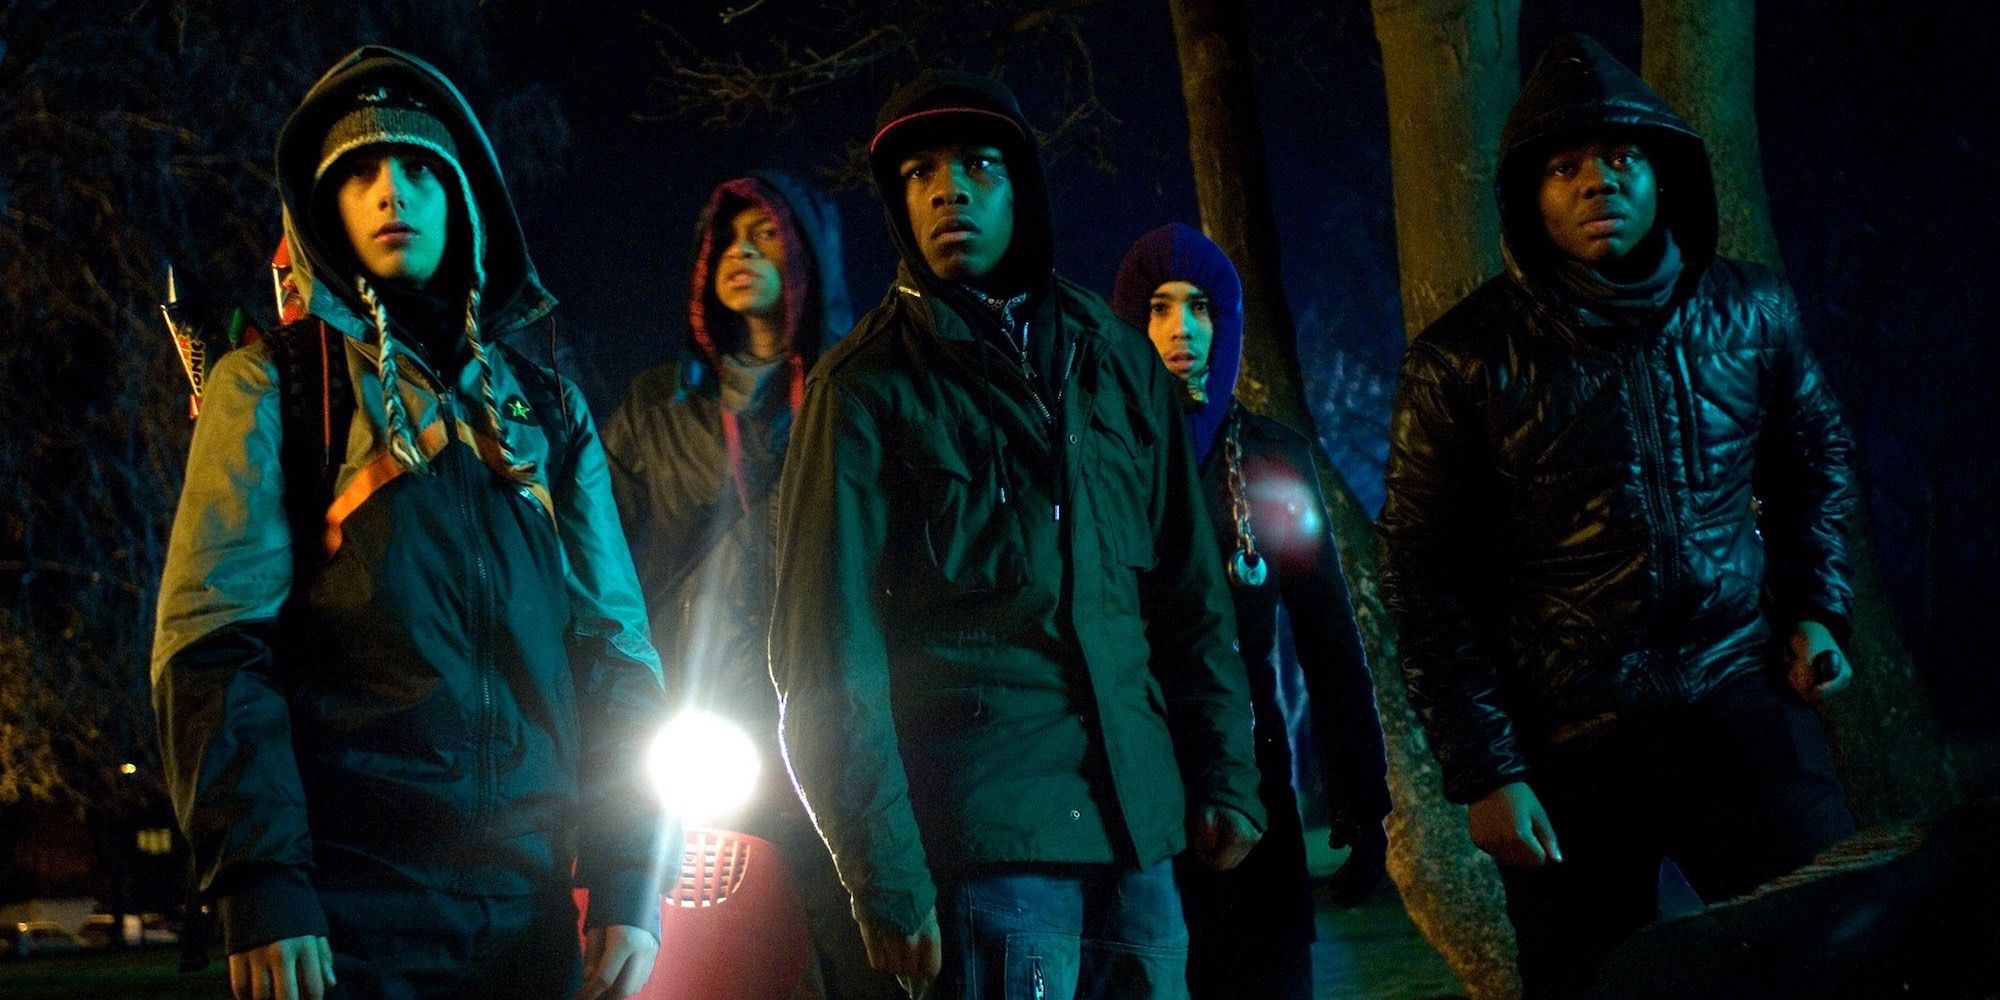 Attack the Block 2: Director Has Discussed Sequel With John Boyega